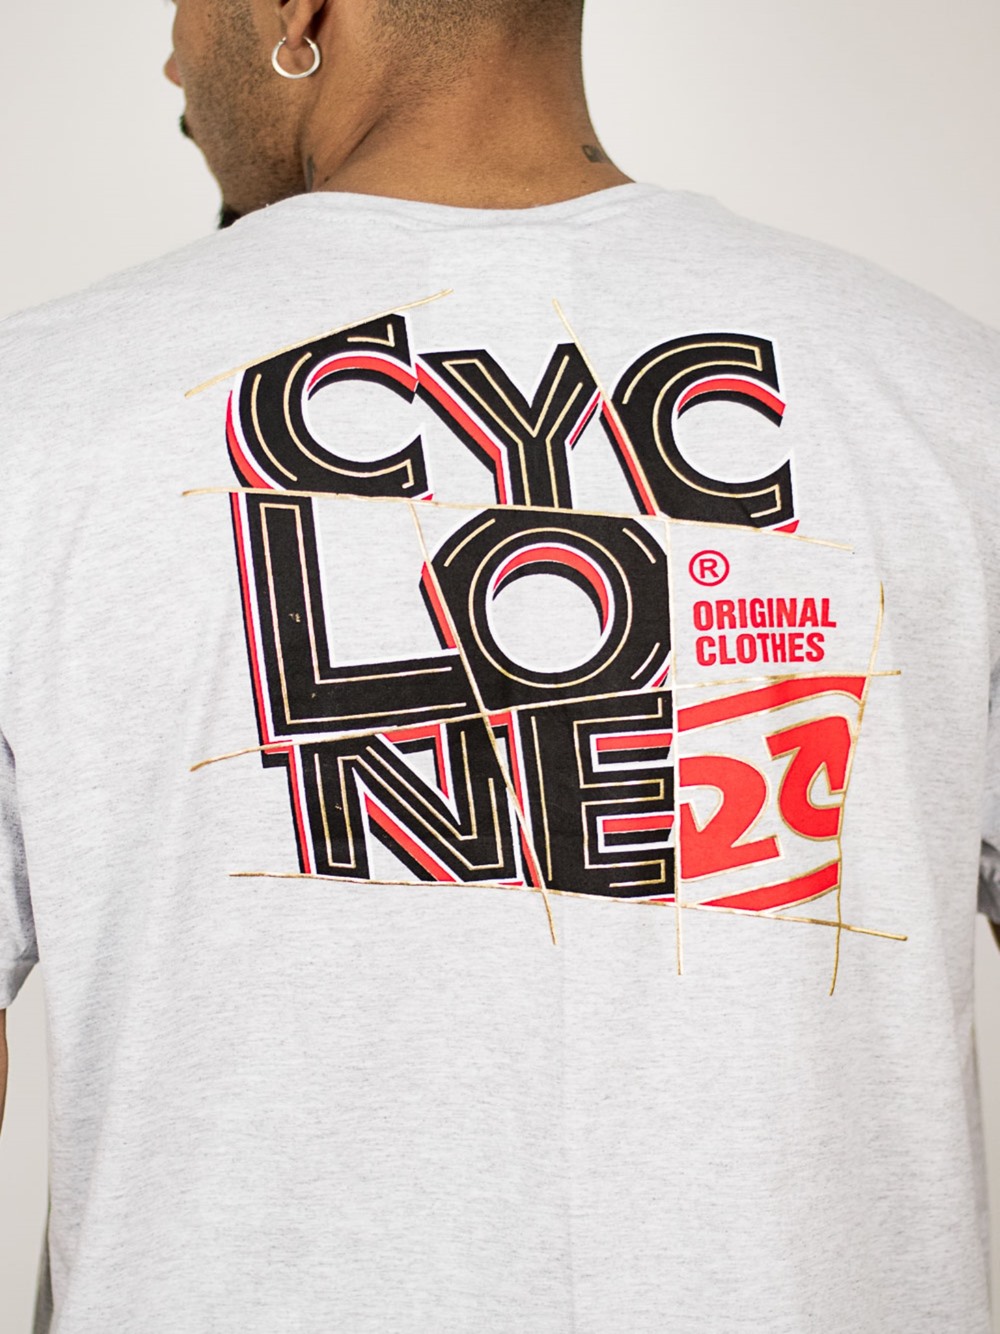 Camiseta Cyclone Loc. Southern Metal - Camiseta Cyclone Loc. Southern Metal  - CYCLONE